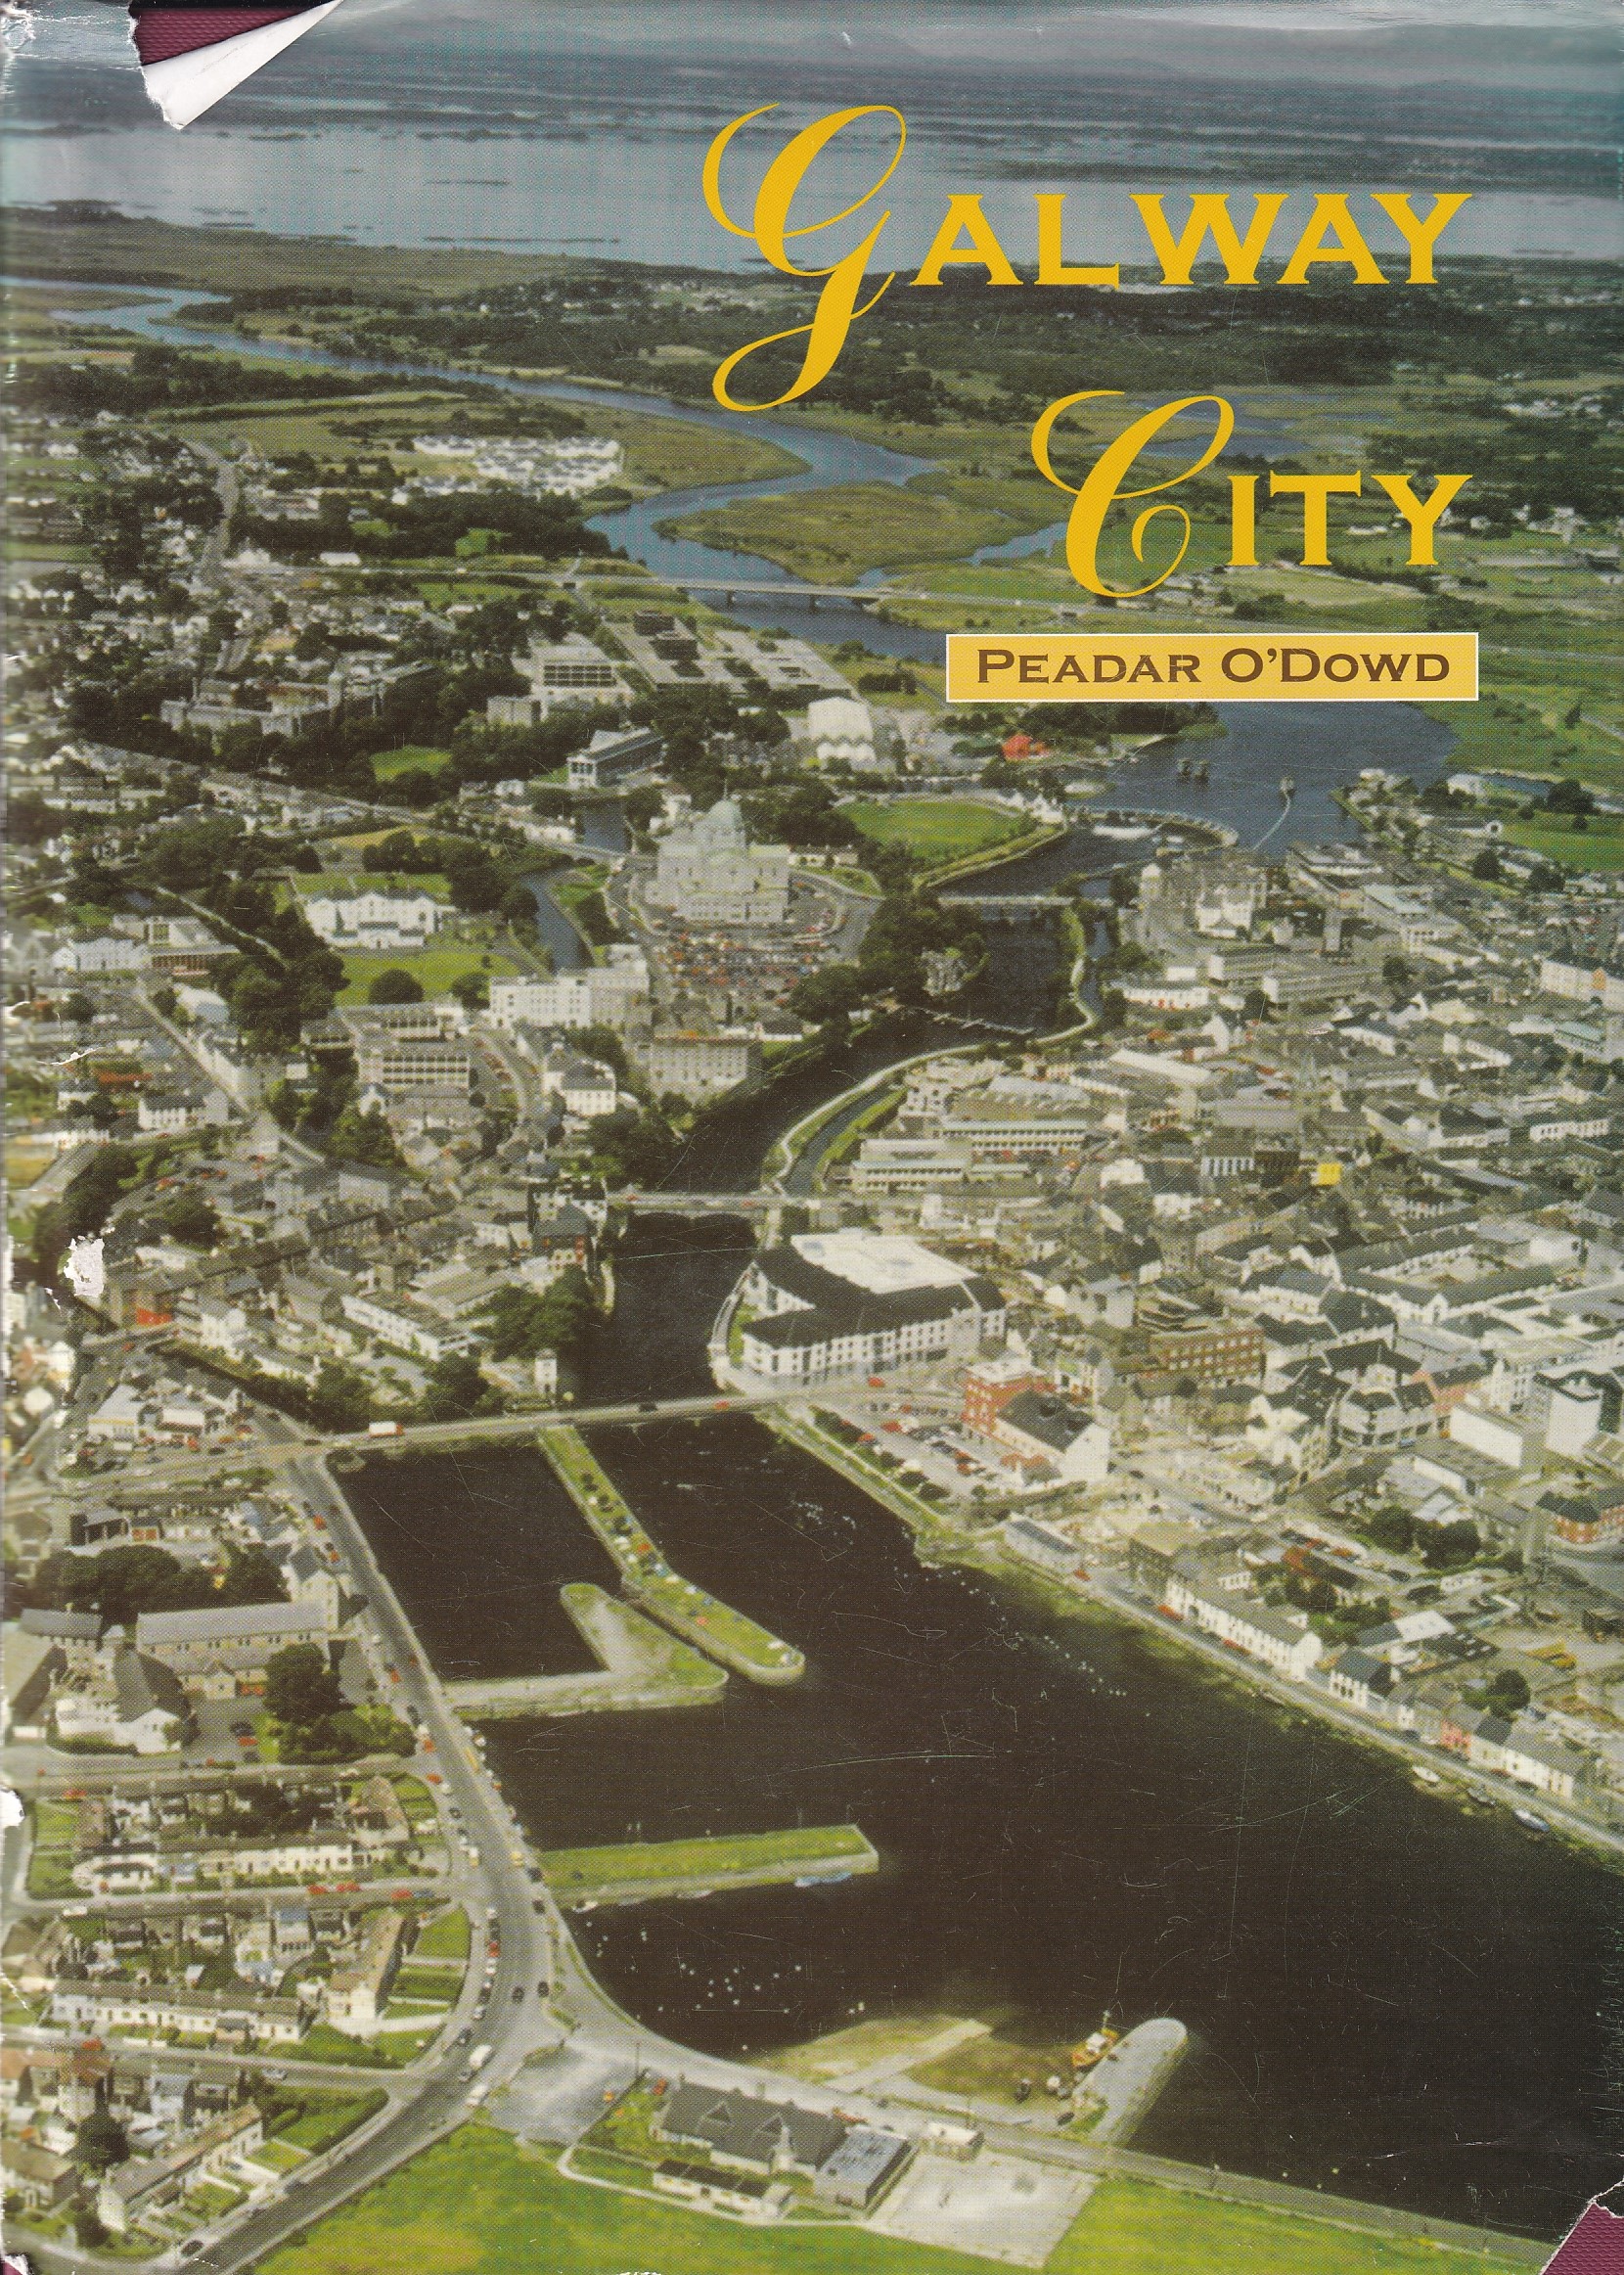 Galway City | Peadar O'Dowd | Charlie Byrne's